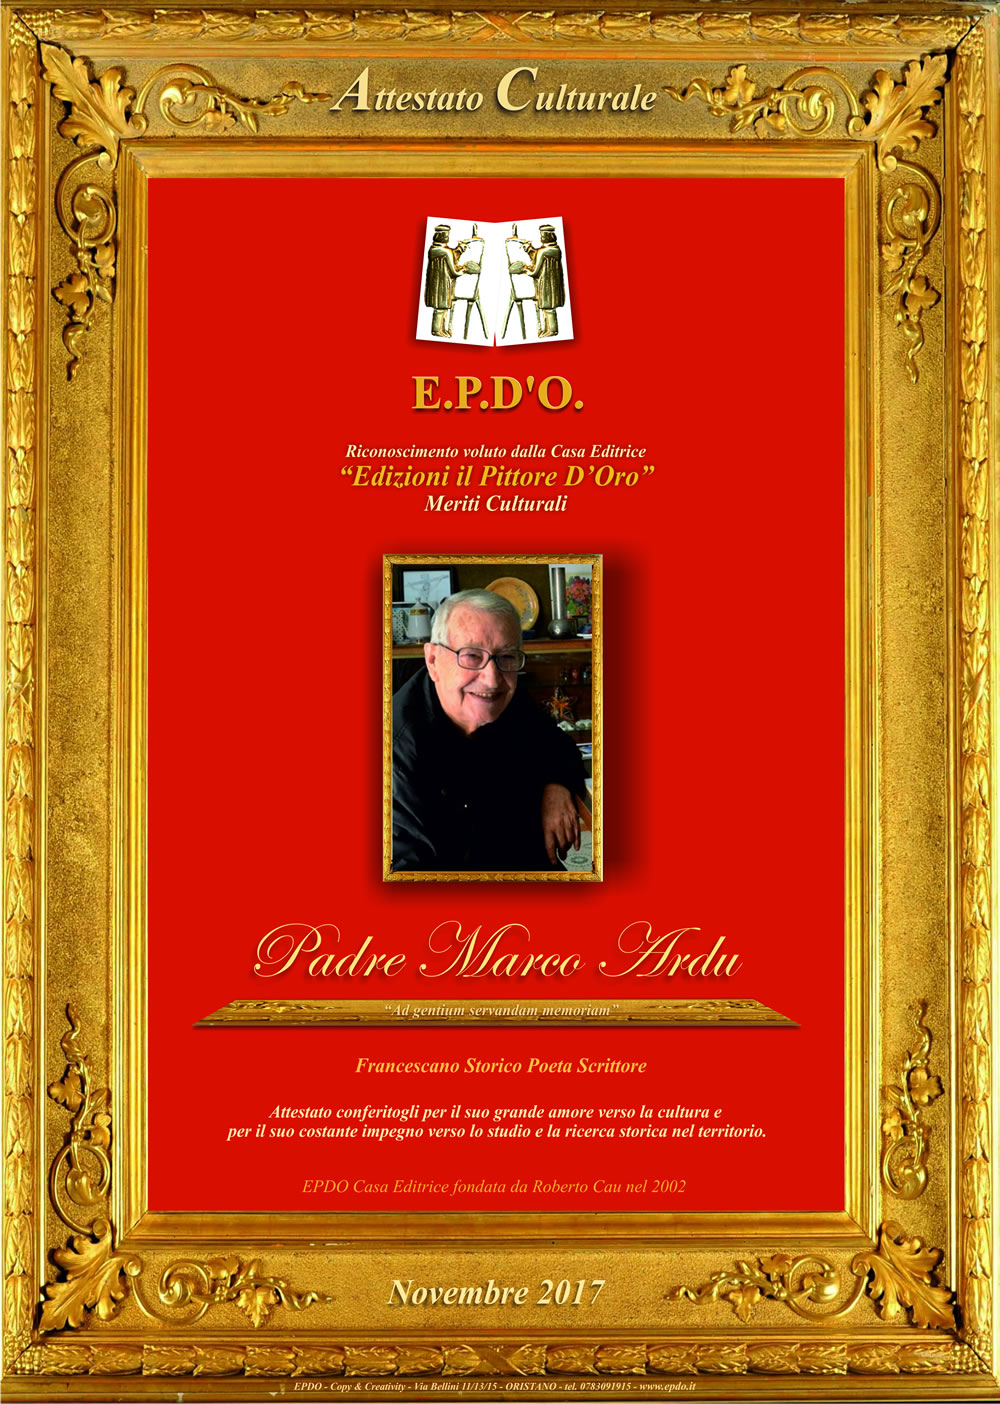 EPDO - Attestato Culturale Padre Marco Ardu